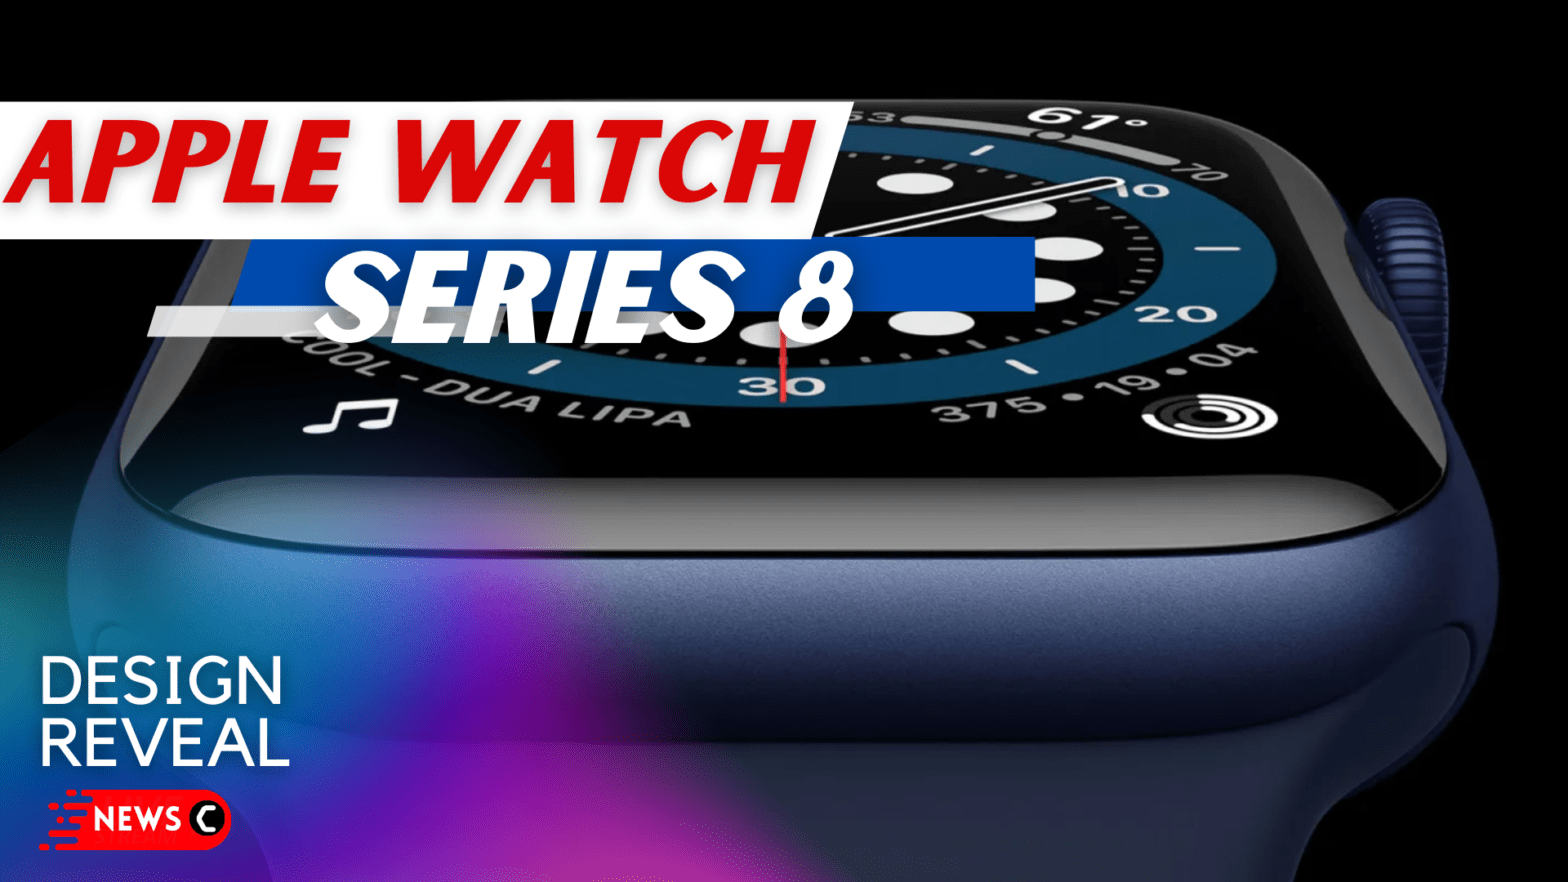 Design Revelation of Apple Watch Series 8